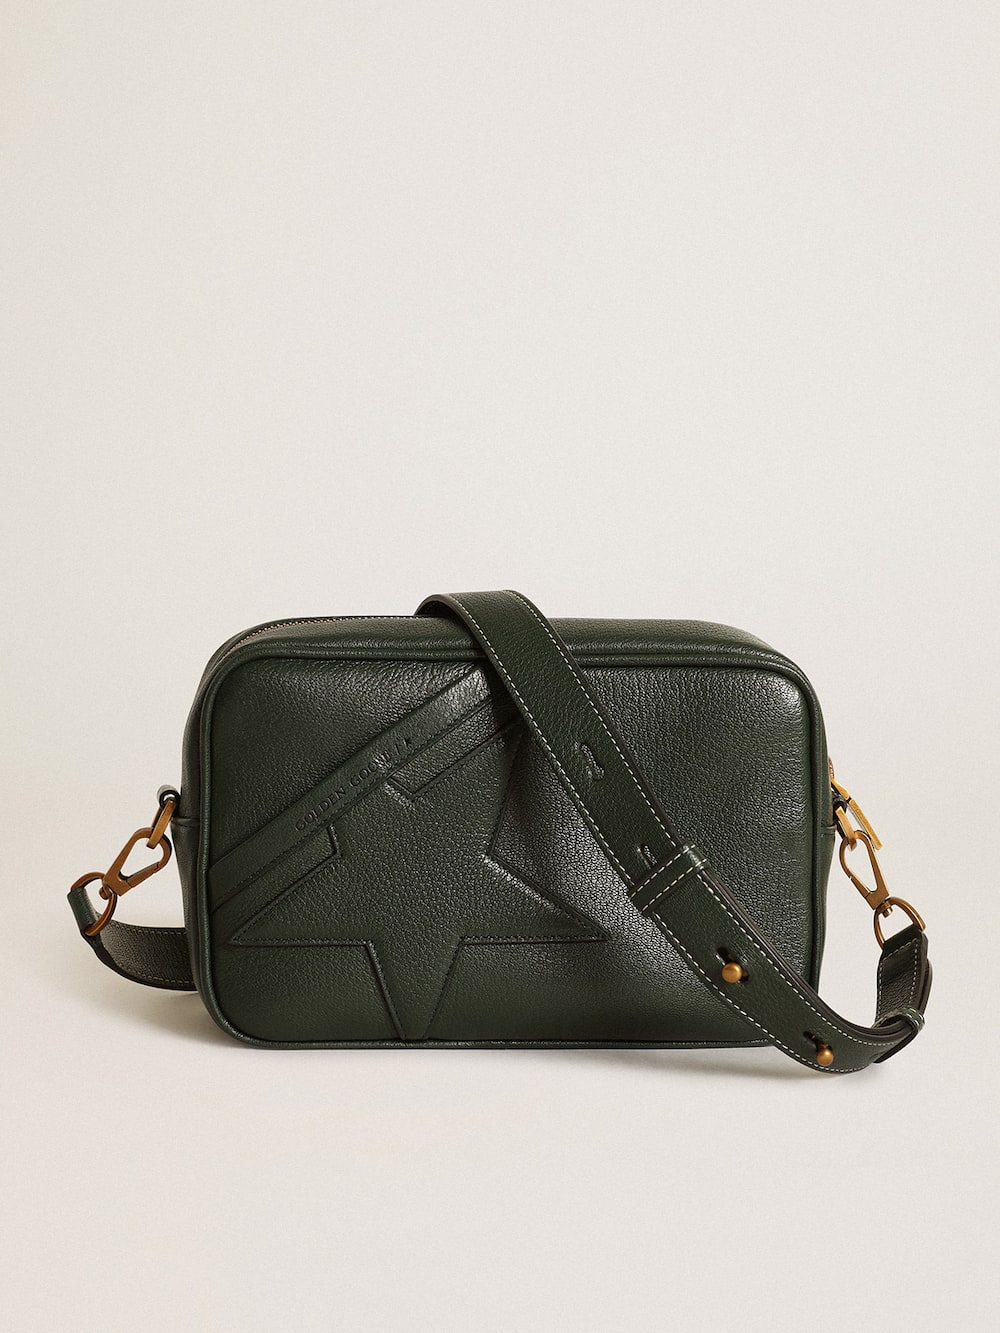 Golden Goose - Damen-Star Bag aus dunkelgrünem Leder mit Ton-in-Ton-Stern in 